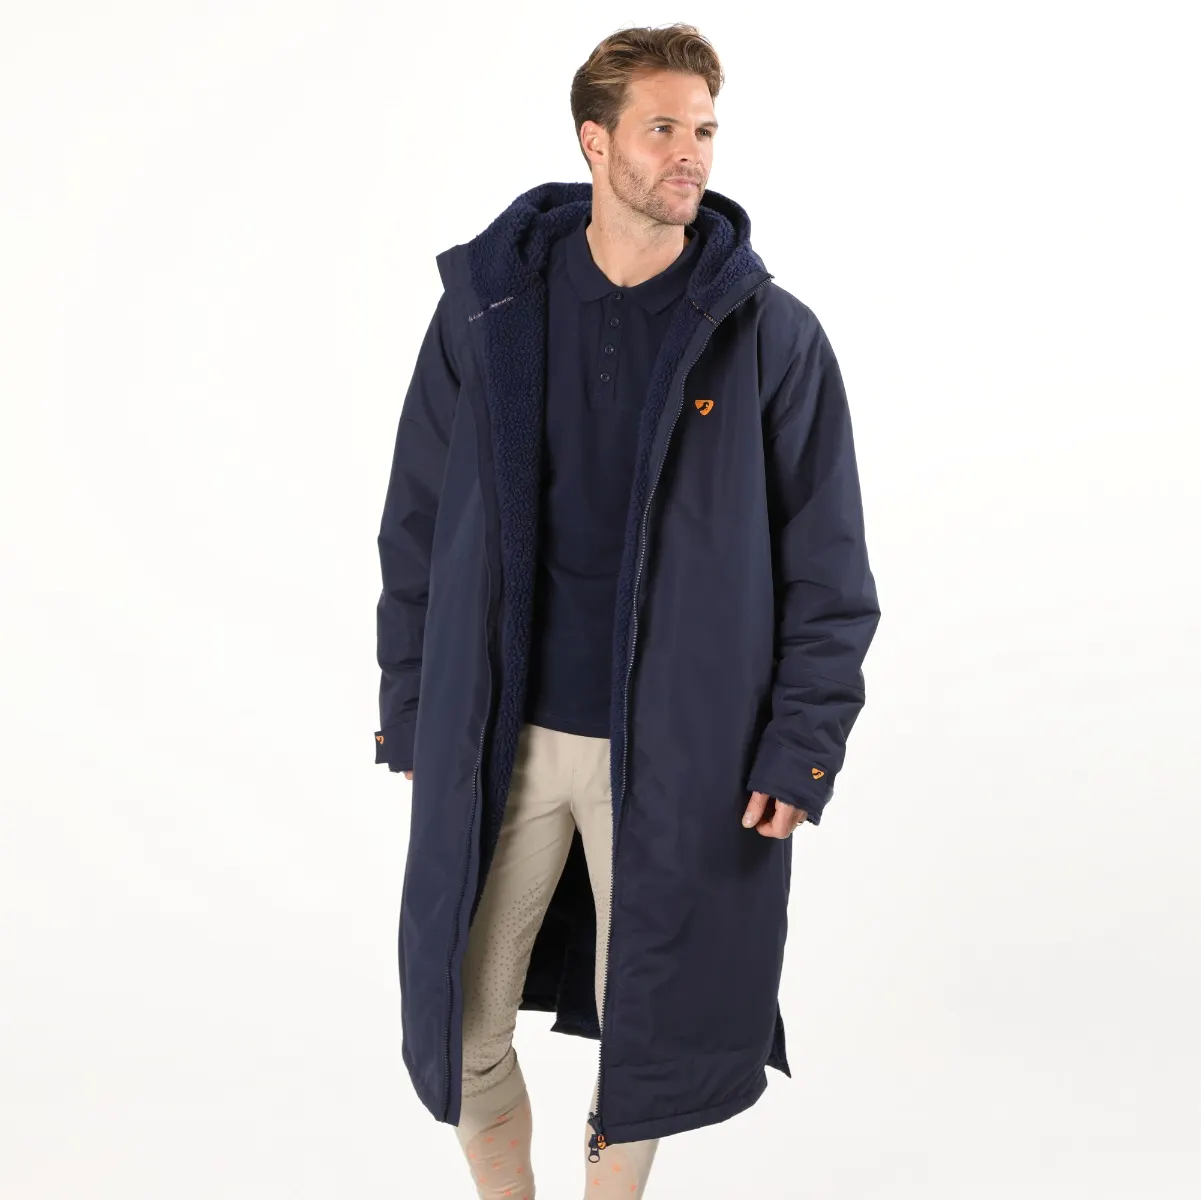 Aubrion "Robe" || Waterproof, Sherpa Lined from Hood to Hem